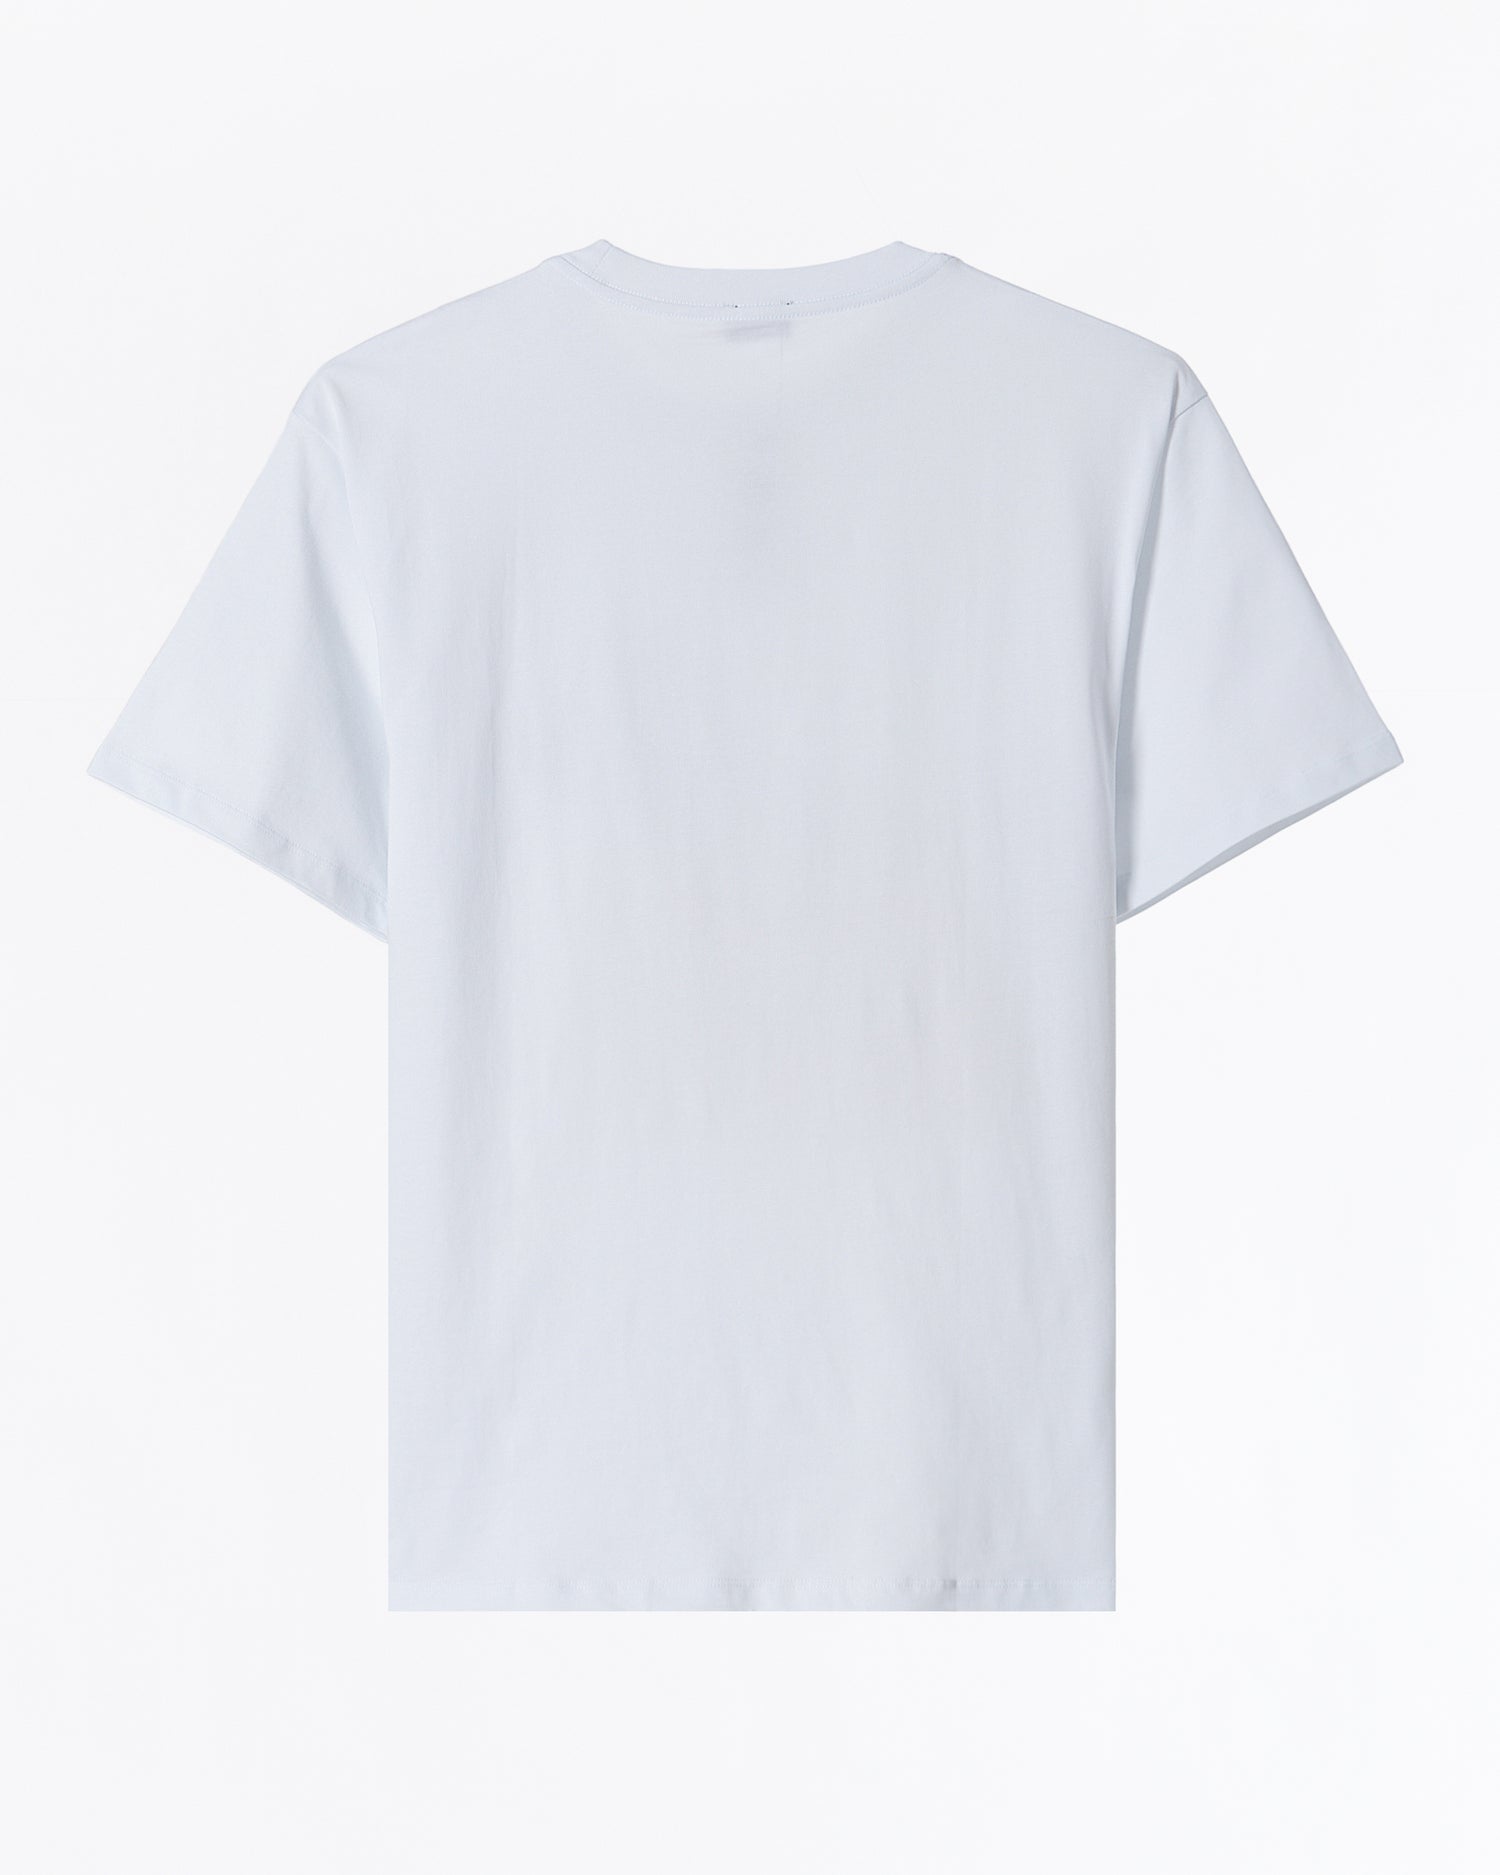 FEN Teddy Bear Printed Unisex White T-Shirt 22.90